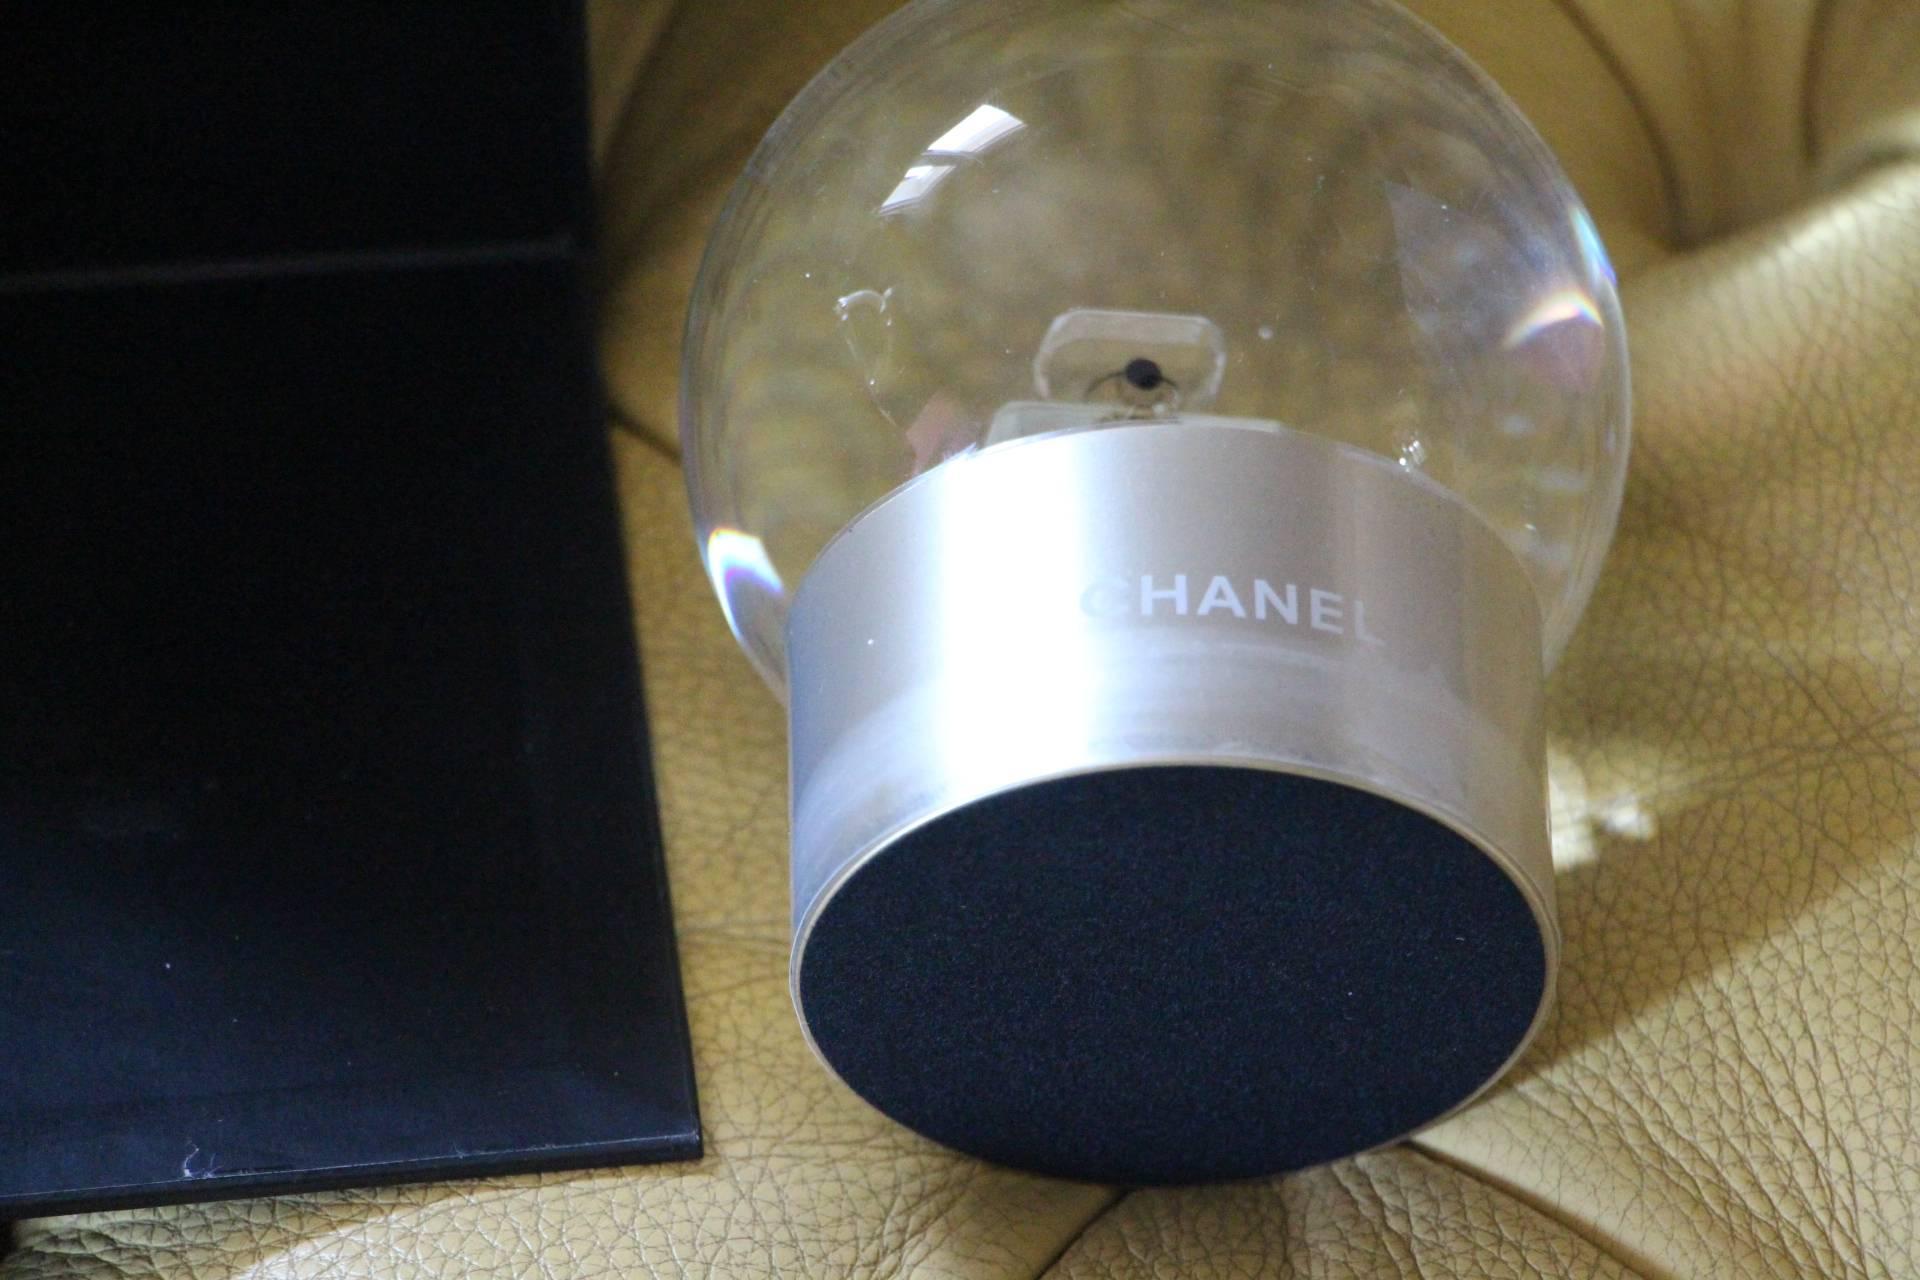 Chanel Snow Globe Dome Chanel VIP Collectible Large Perfume N° 5 Snow Globe 2